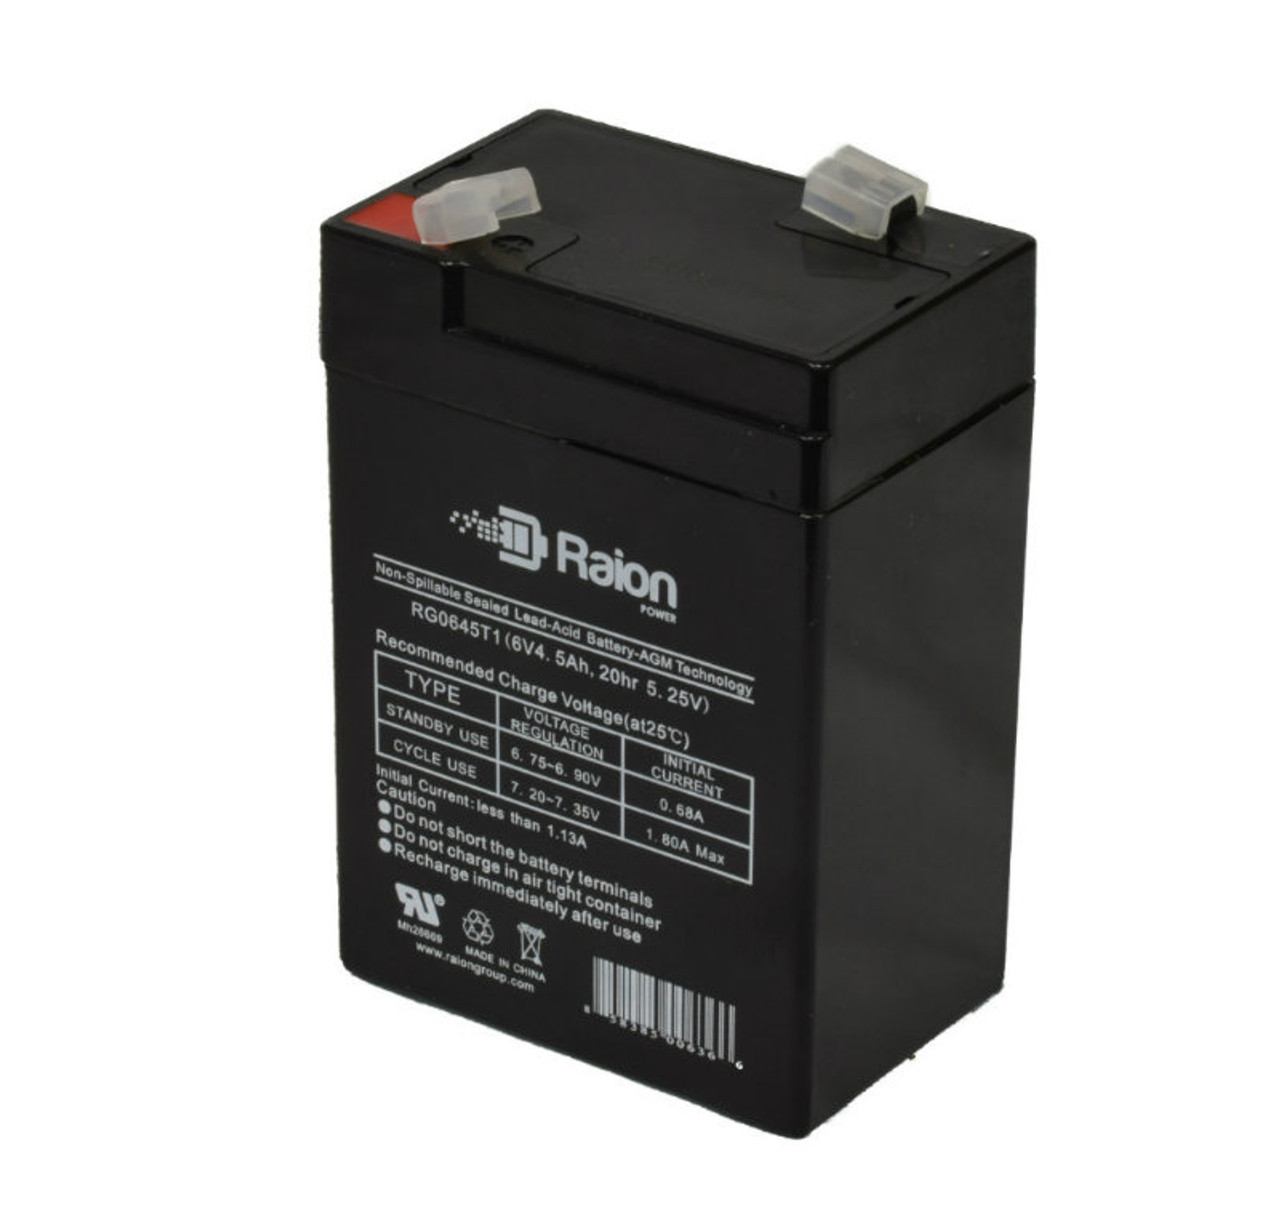 Raion Power RG0645T1 6V 4.5Ah Replacement Battery Cartridge for Sonnenschein A5004.0S